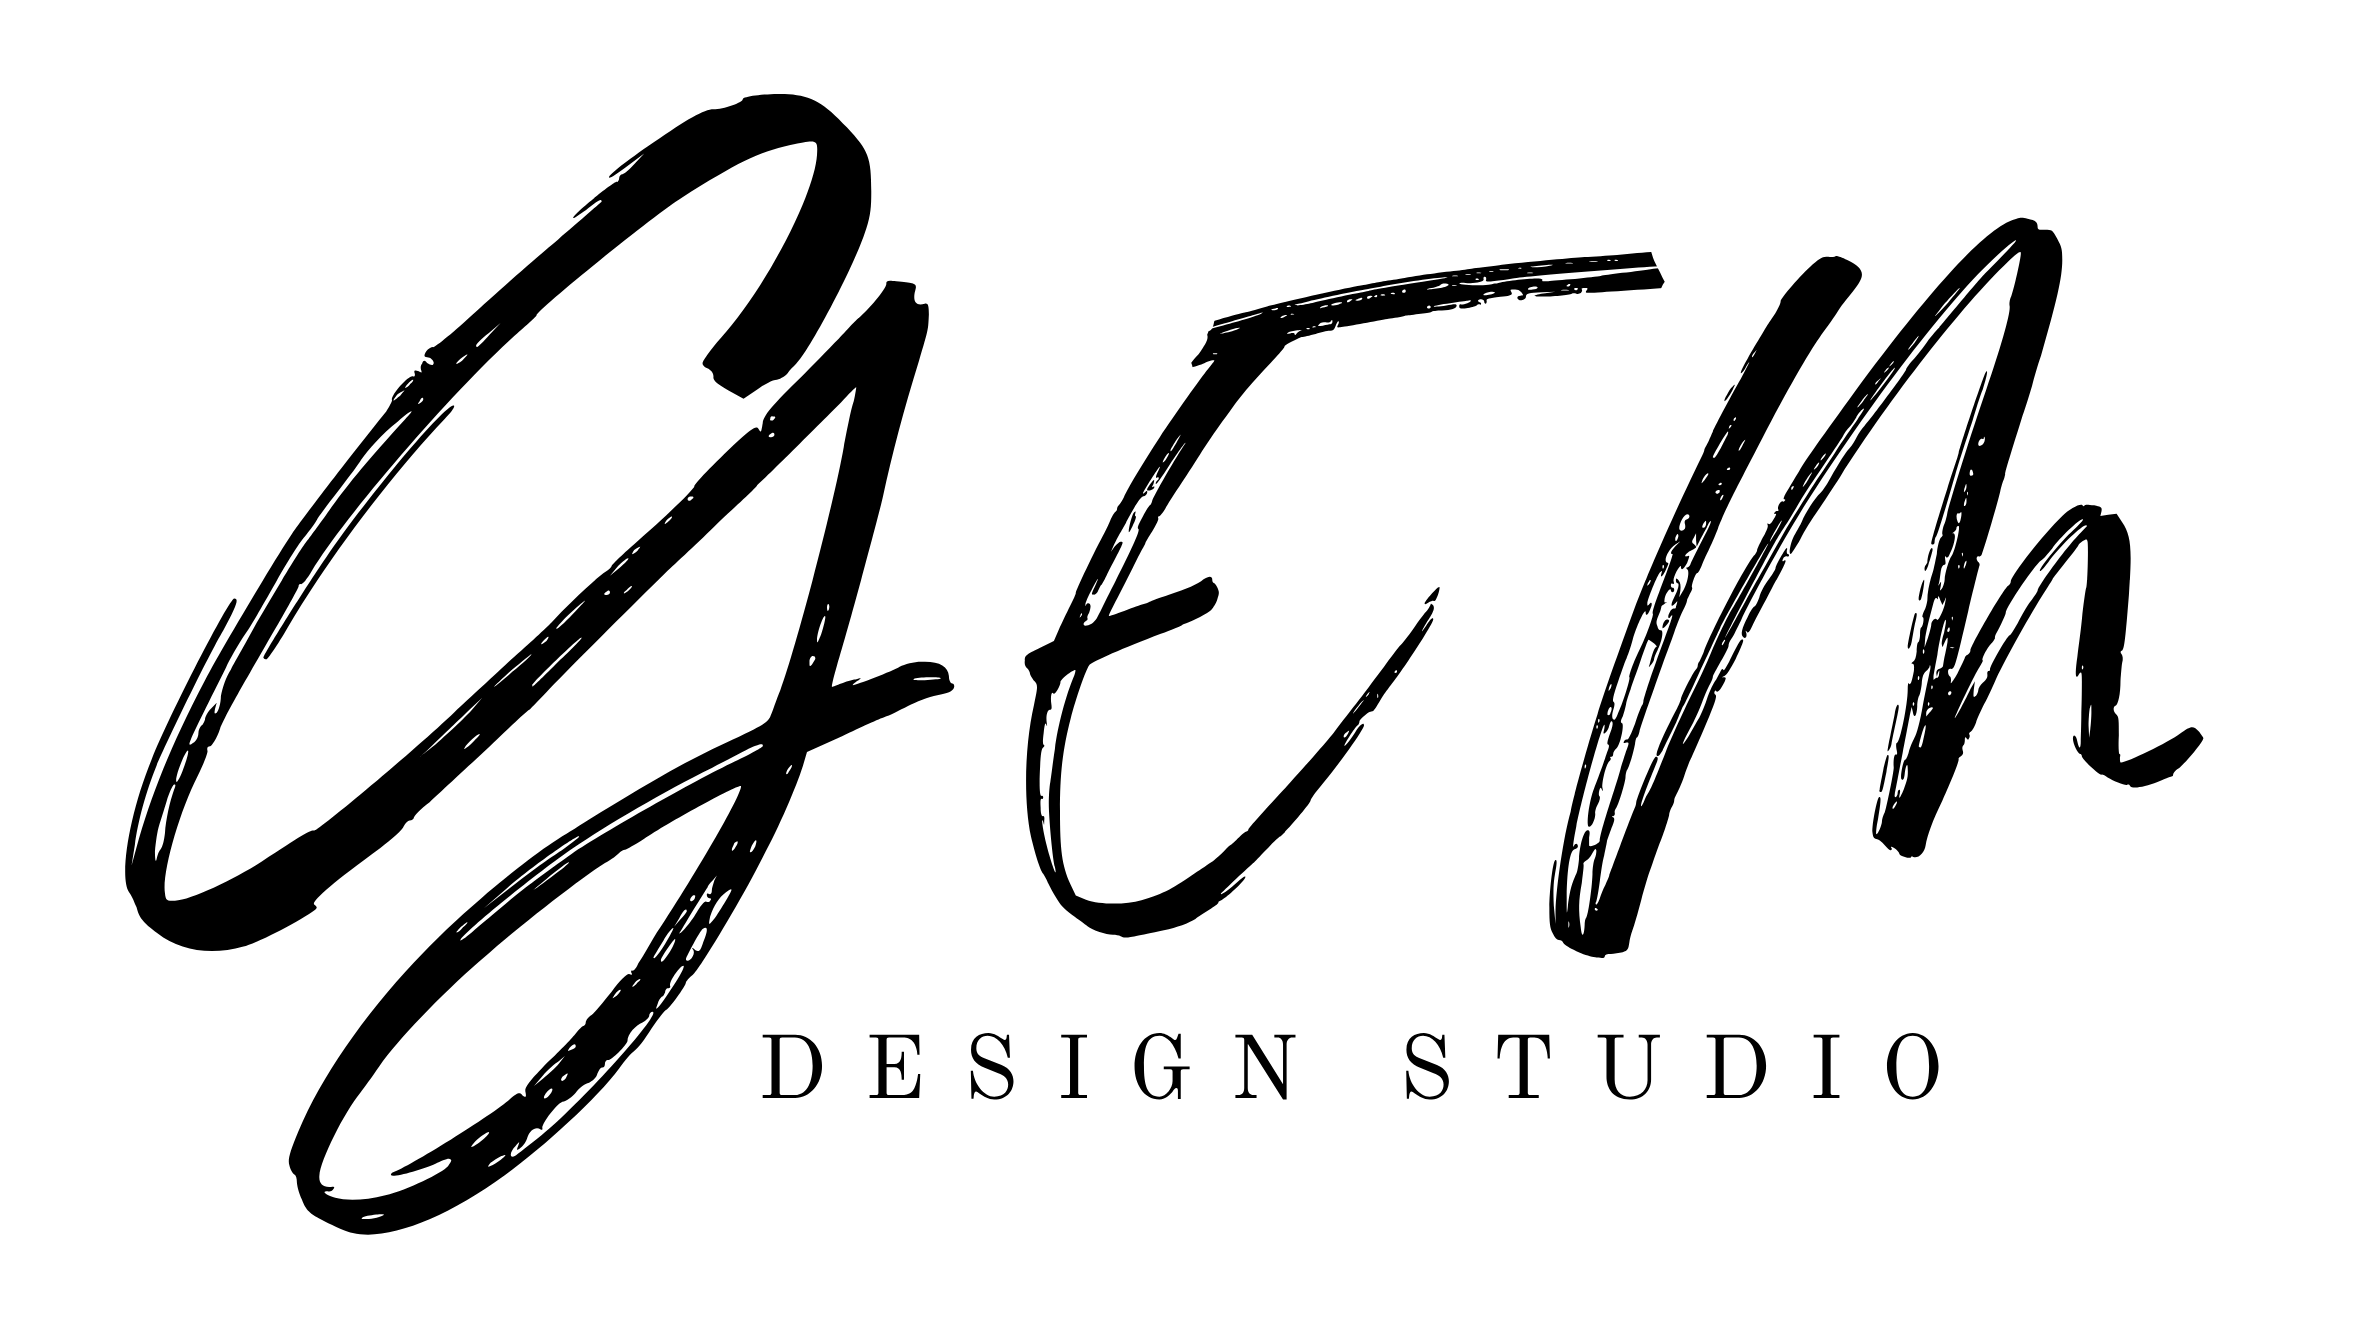 GEM Design Studio